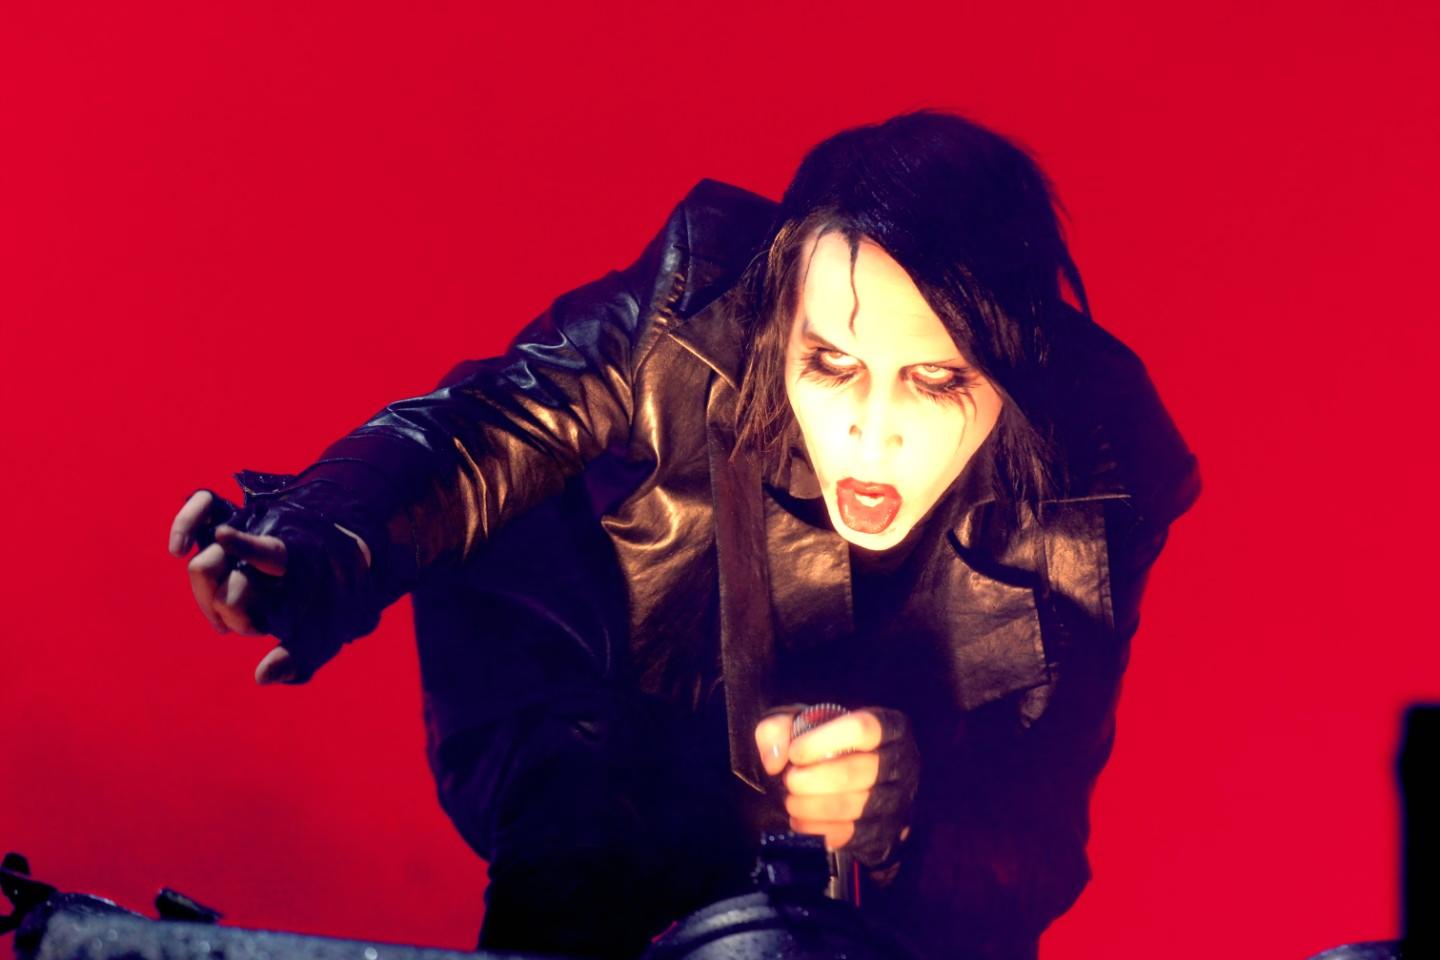 Billets Marilyn Manson | Places de Concert Marilyn Manson 2020 - viagogo